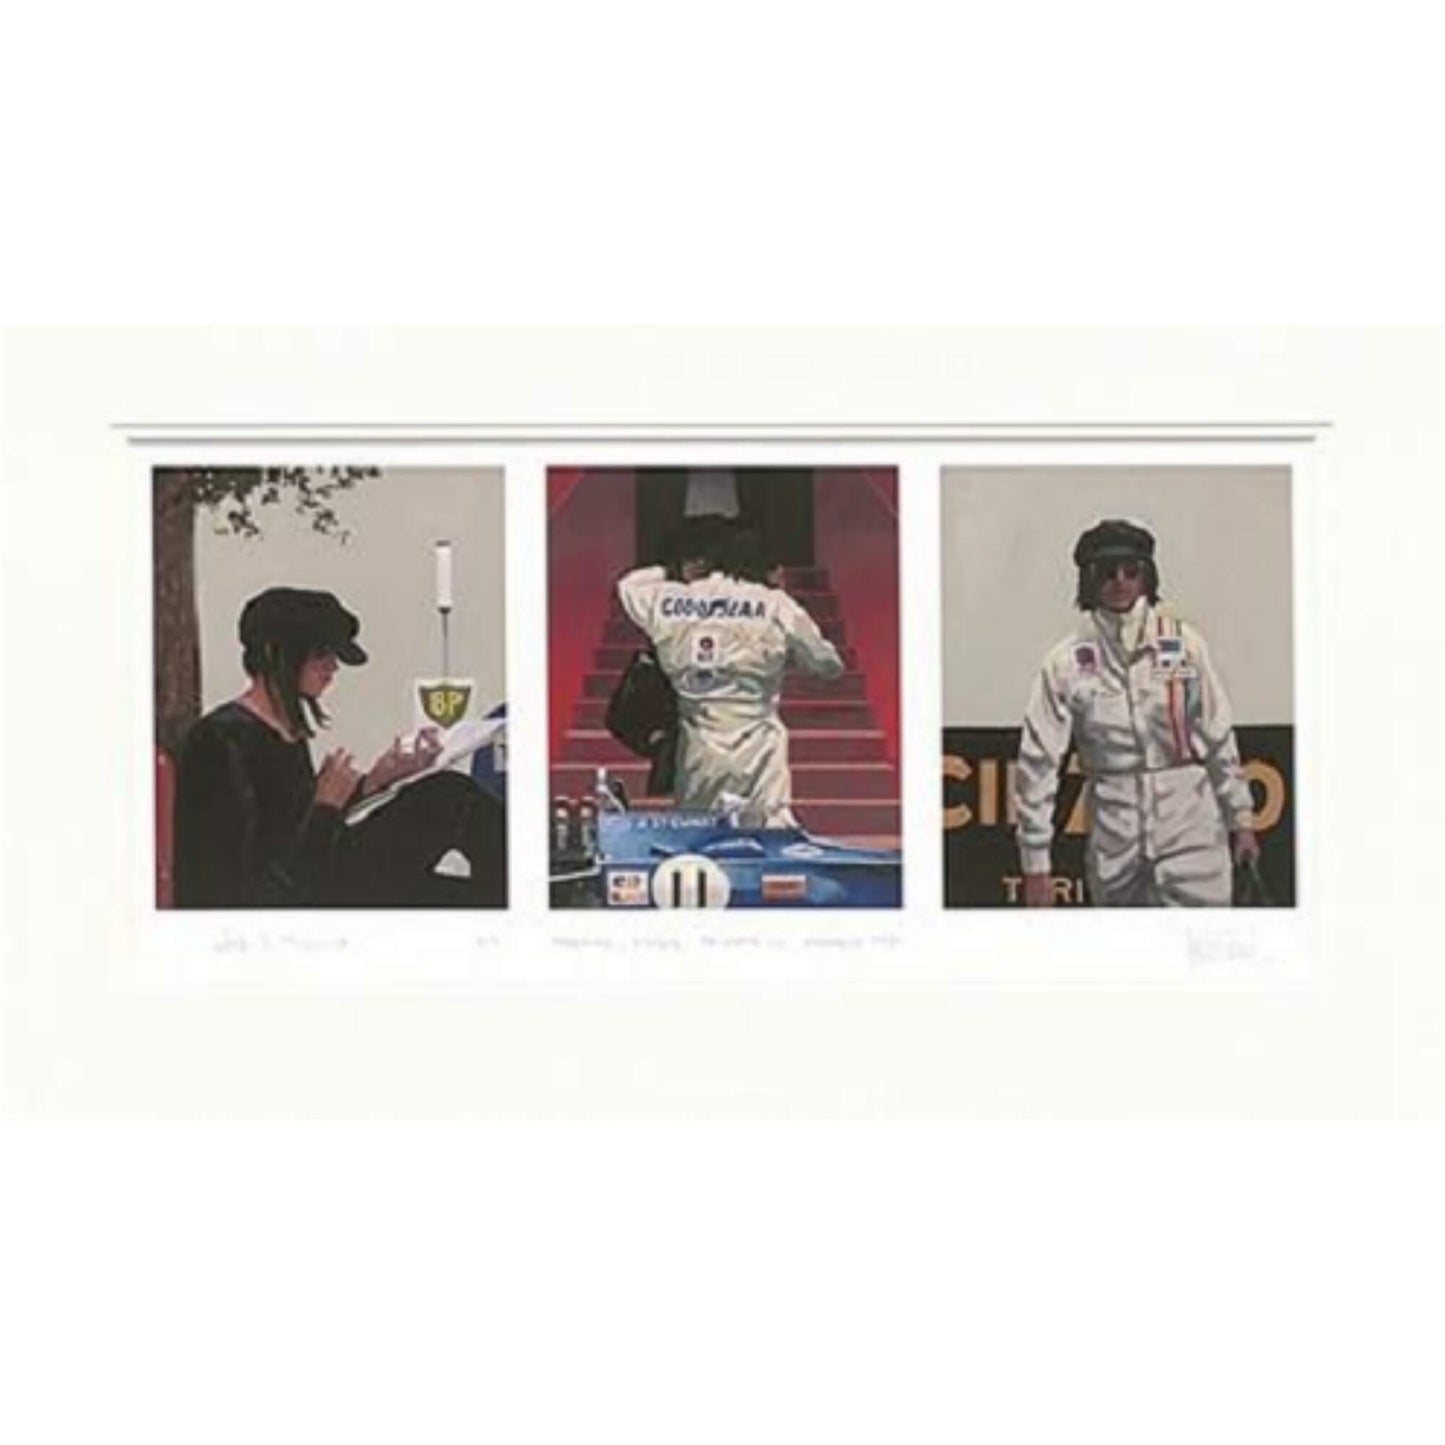 Tension, Timing & Triumph Limited Edition Print Jack Vettriano